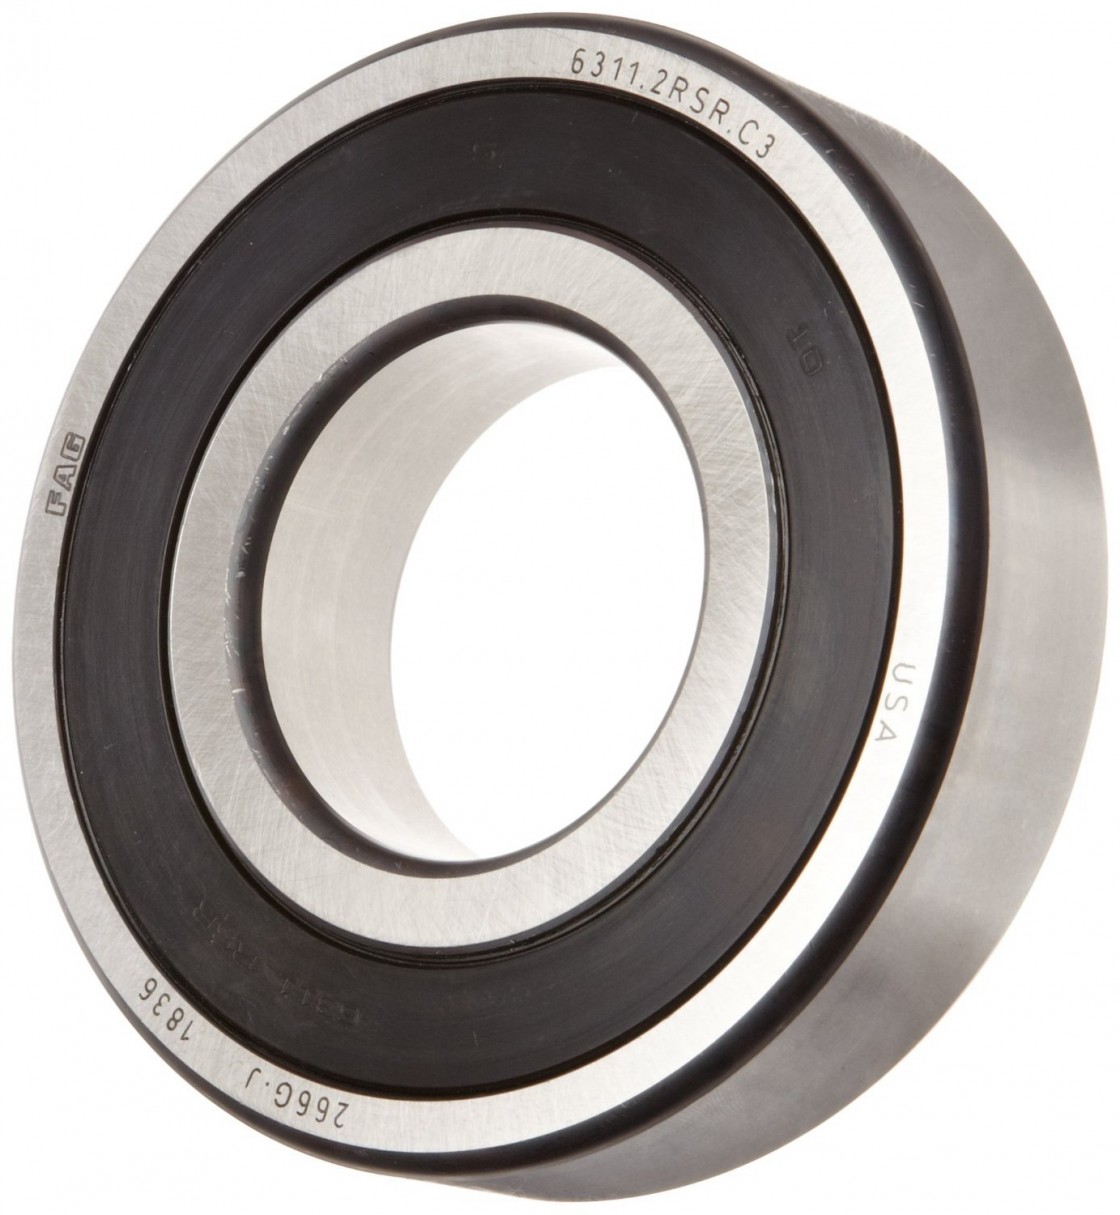 UBC Deep groove ball bearing 6201 6202 6203 all type bearing